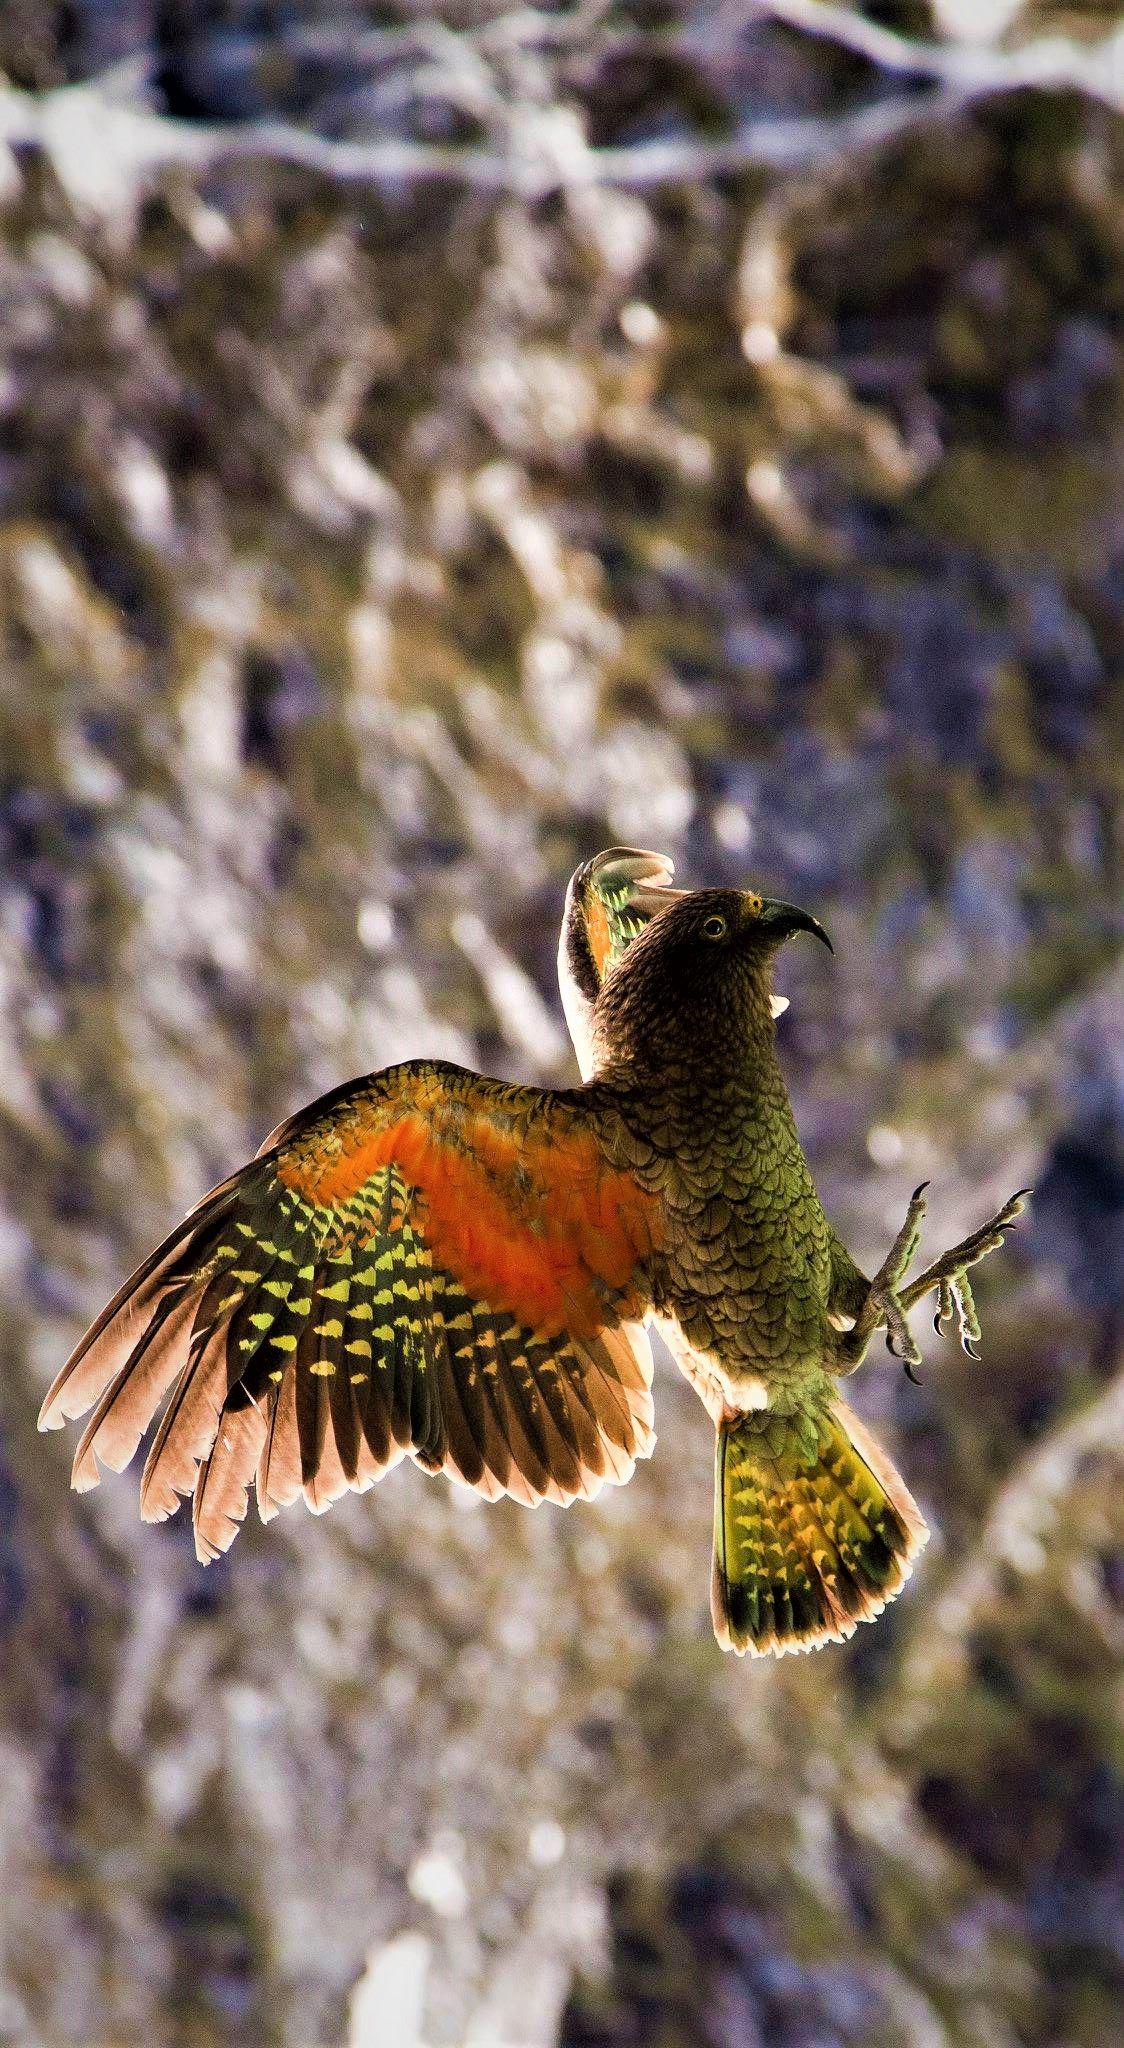 Kea in flight in Fiordland National Park, New Zealand | Beautiful ...